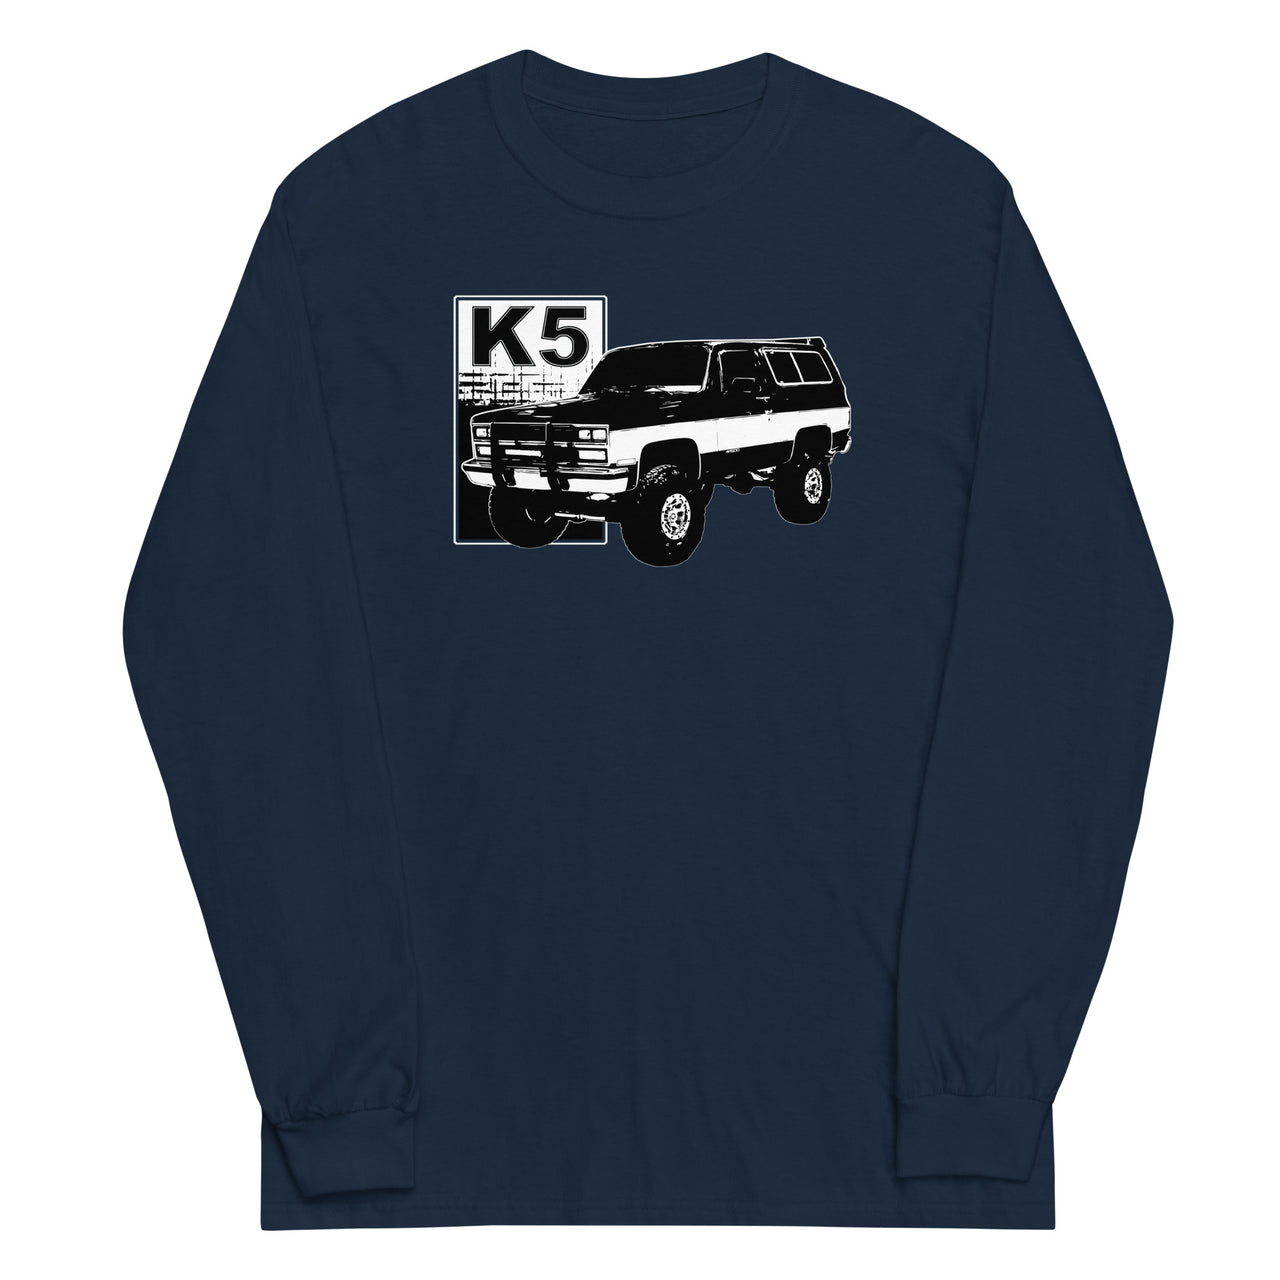 K5 Blazer Long Sleeve T-Shirt in navy